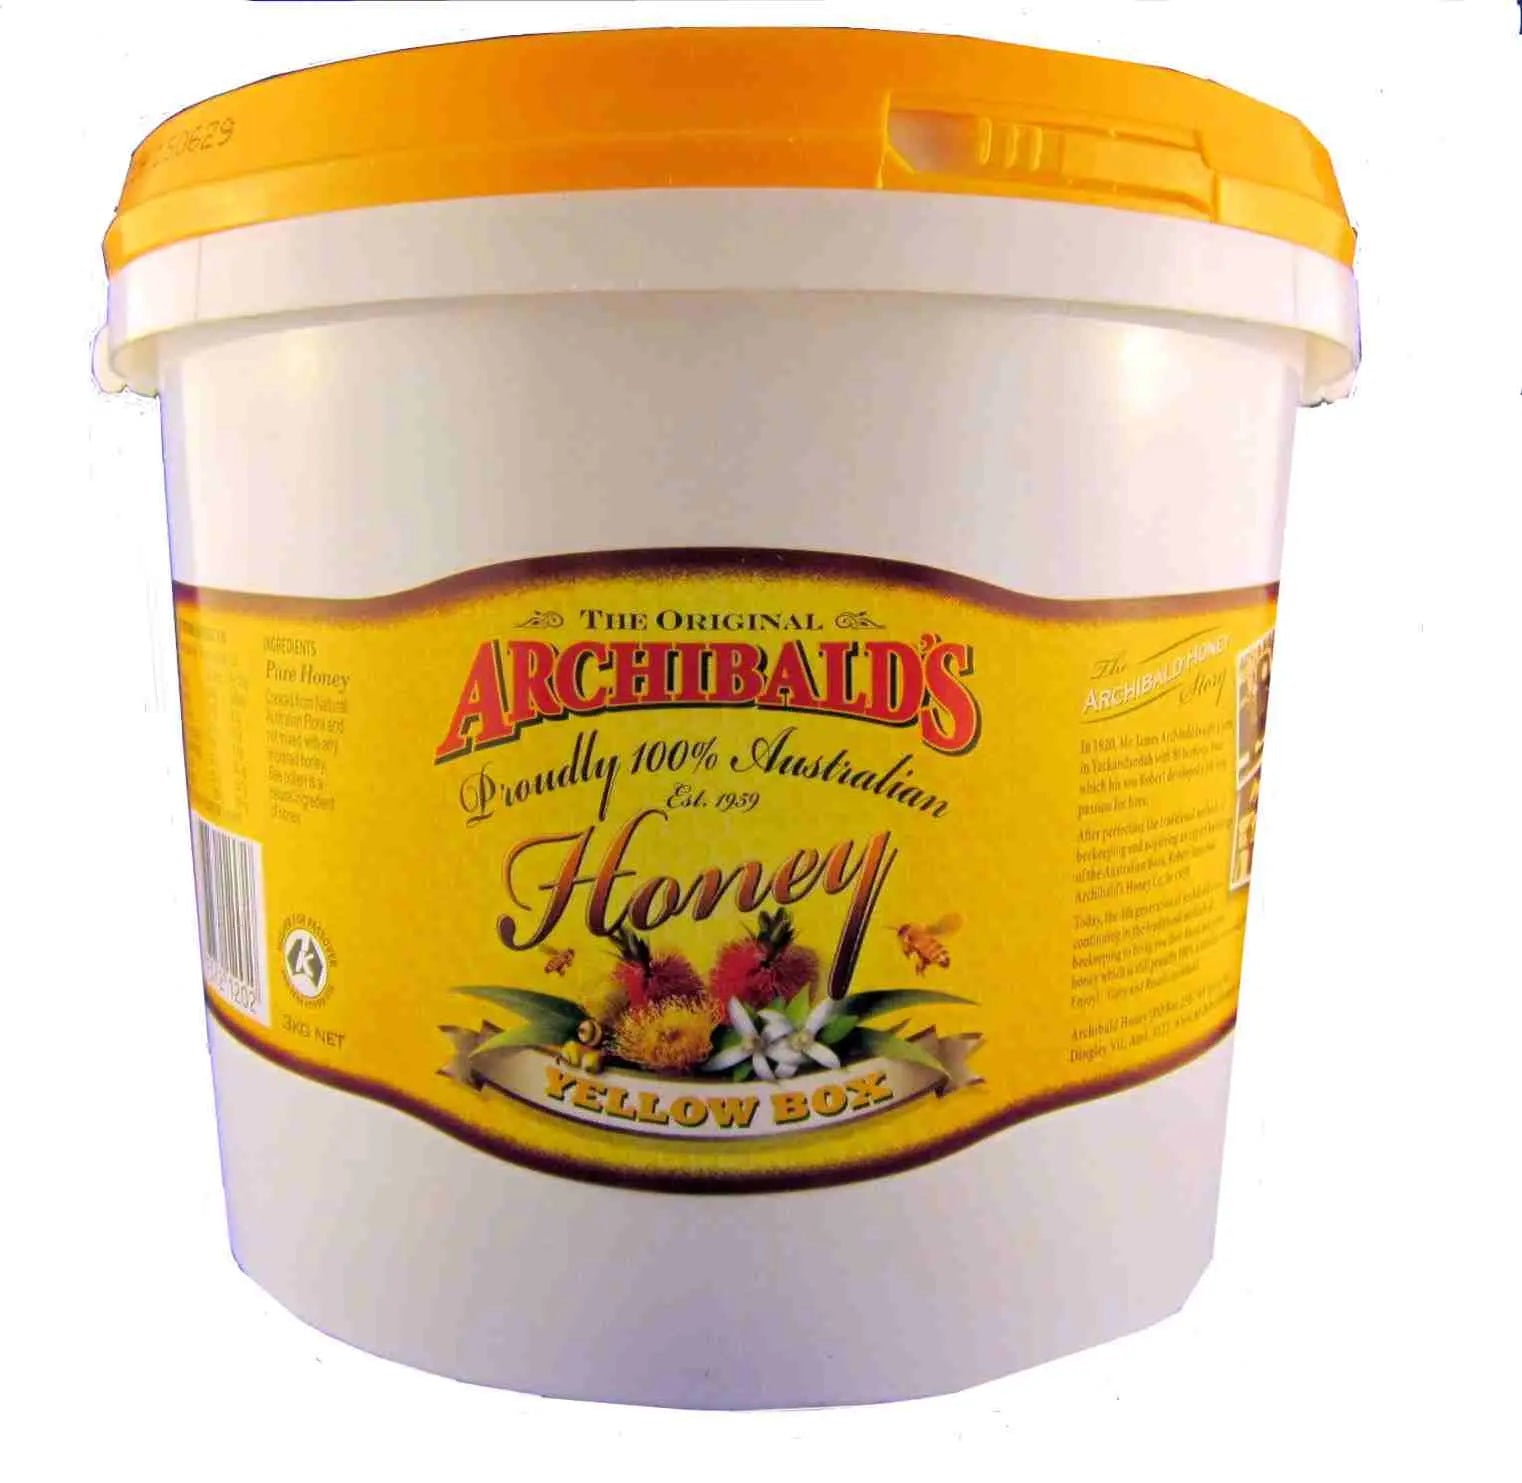 Archibalds yellow box 3kg honey tub